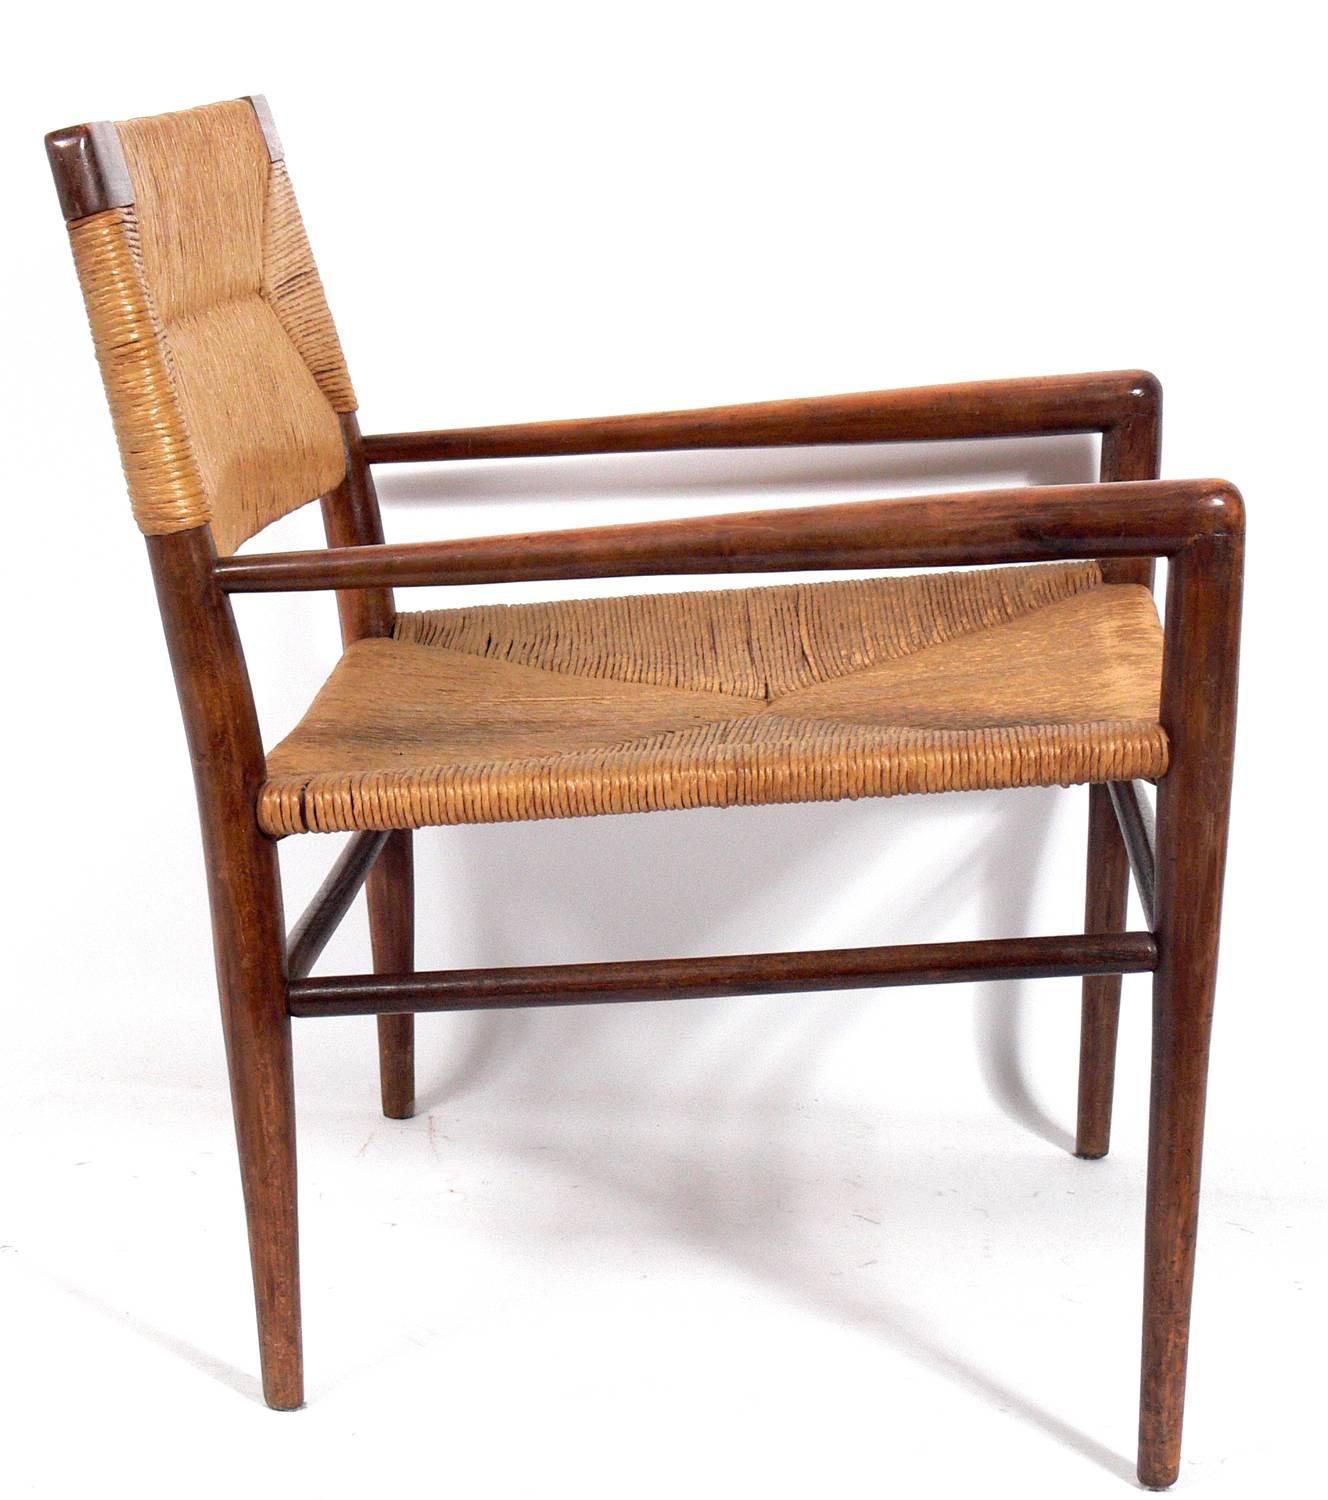 Walnut and rush lounge chair by Mel Smilow, American, circa 1950s. Retains it's wonderful original patina.